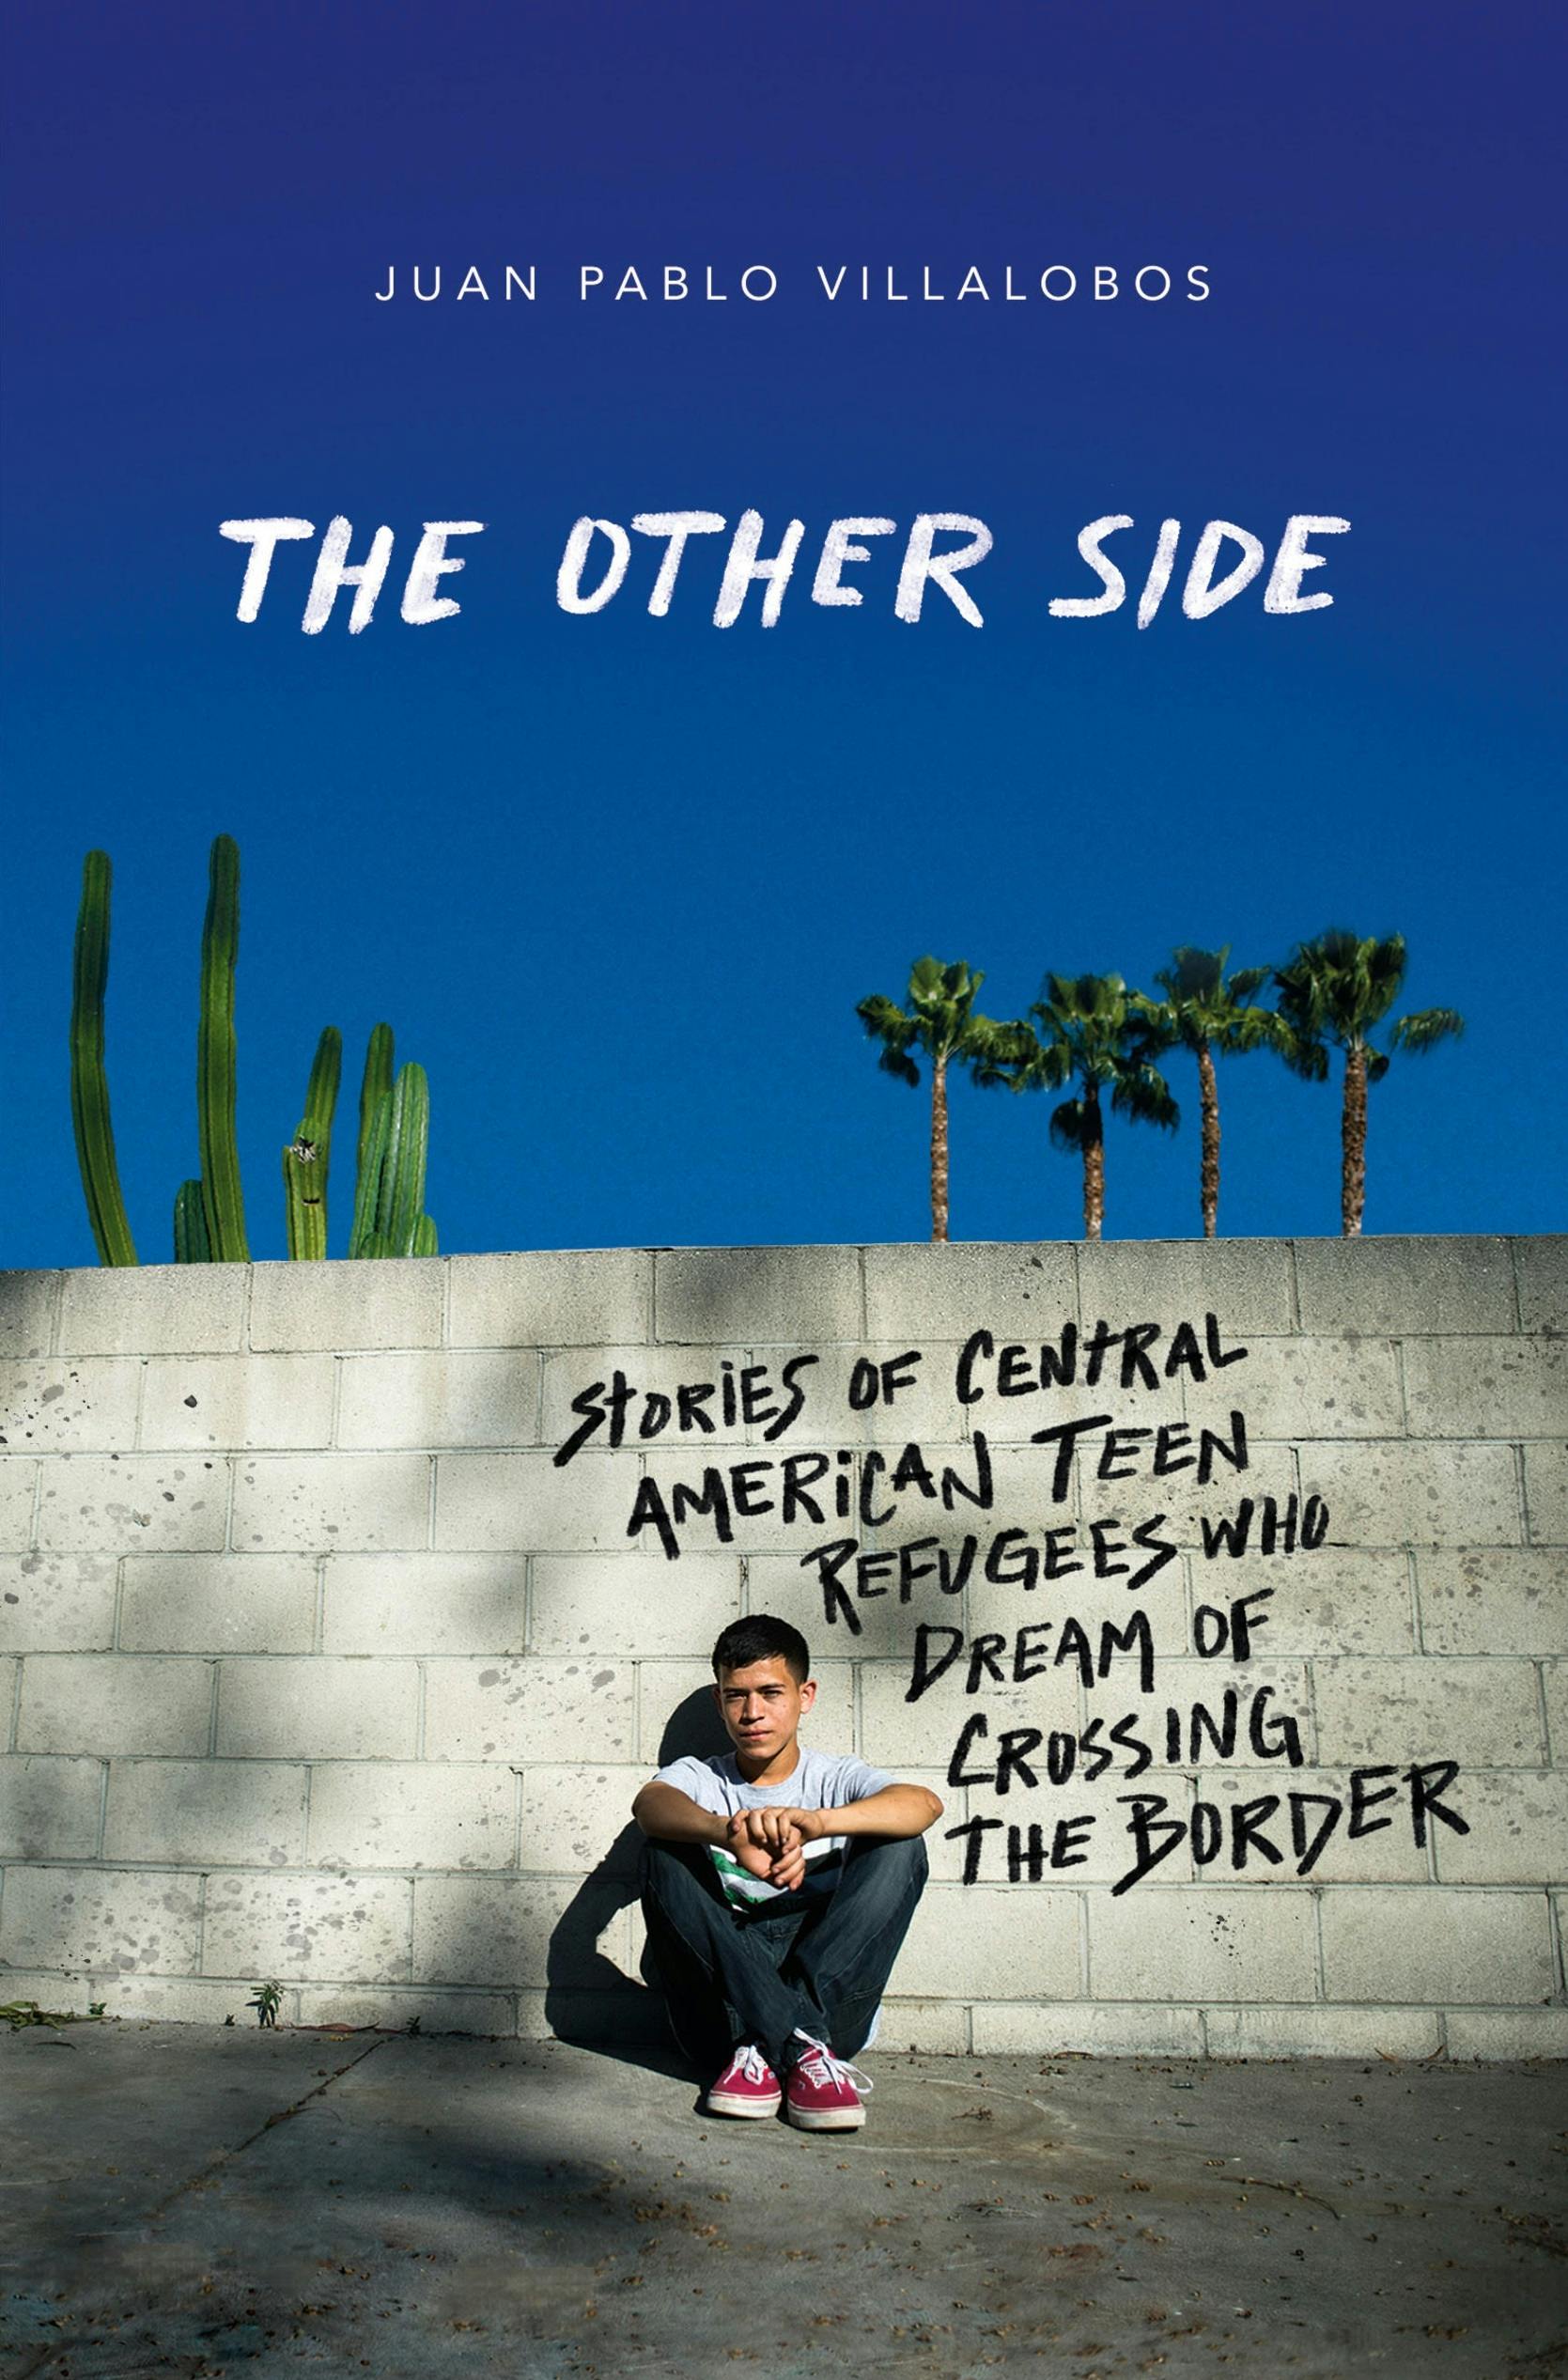 The Other Side of the Neighbourhood - Capa e contracapa da versão